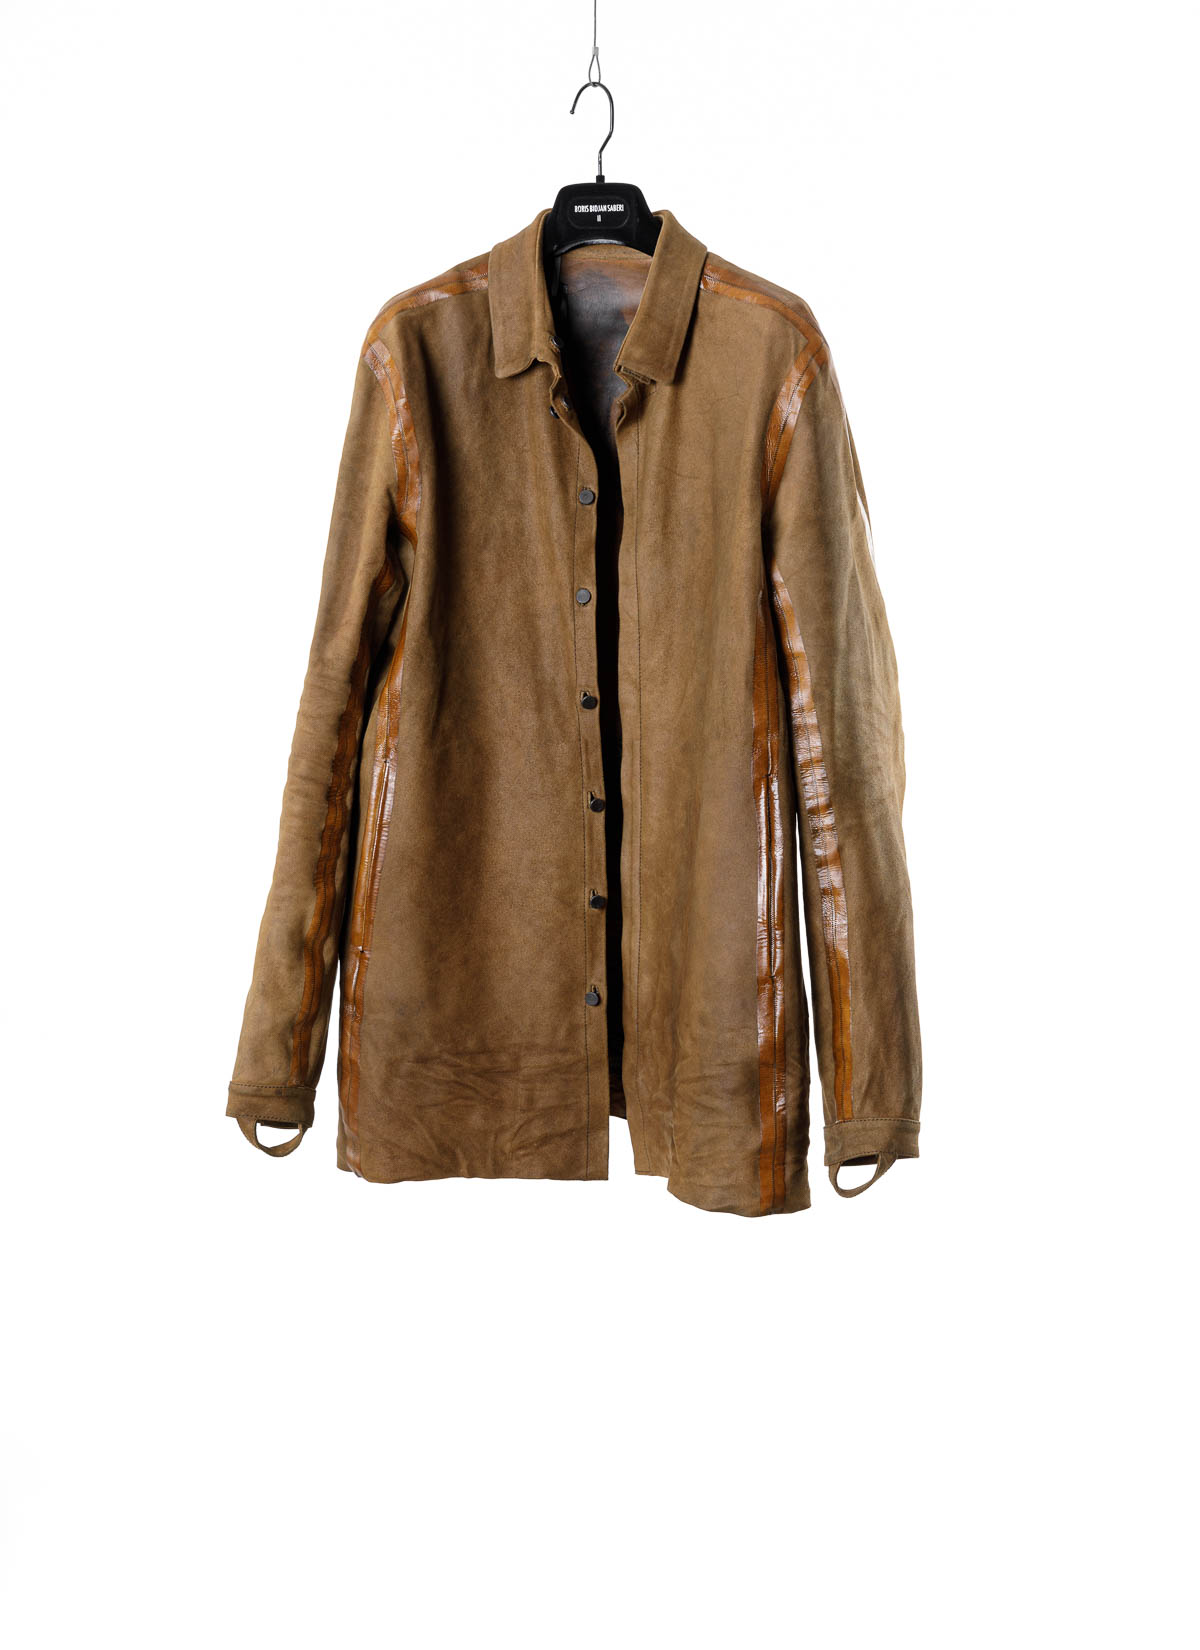 hide-m | BORIS BIDJAN SABERI gum Shirt SHIRT5, Jacket horse leather